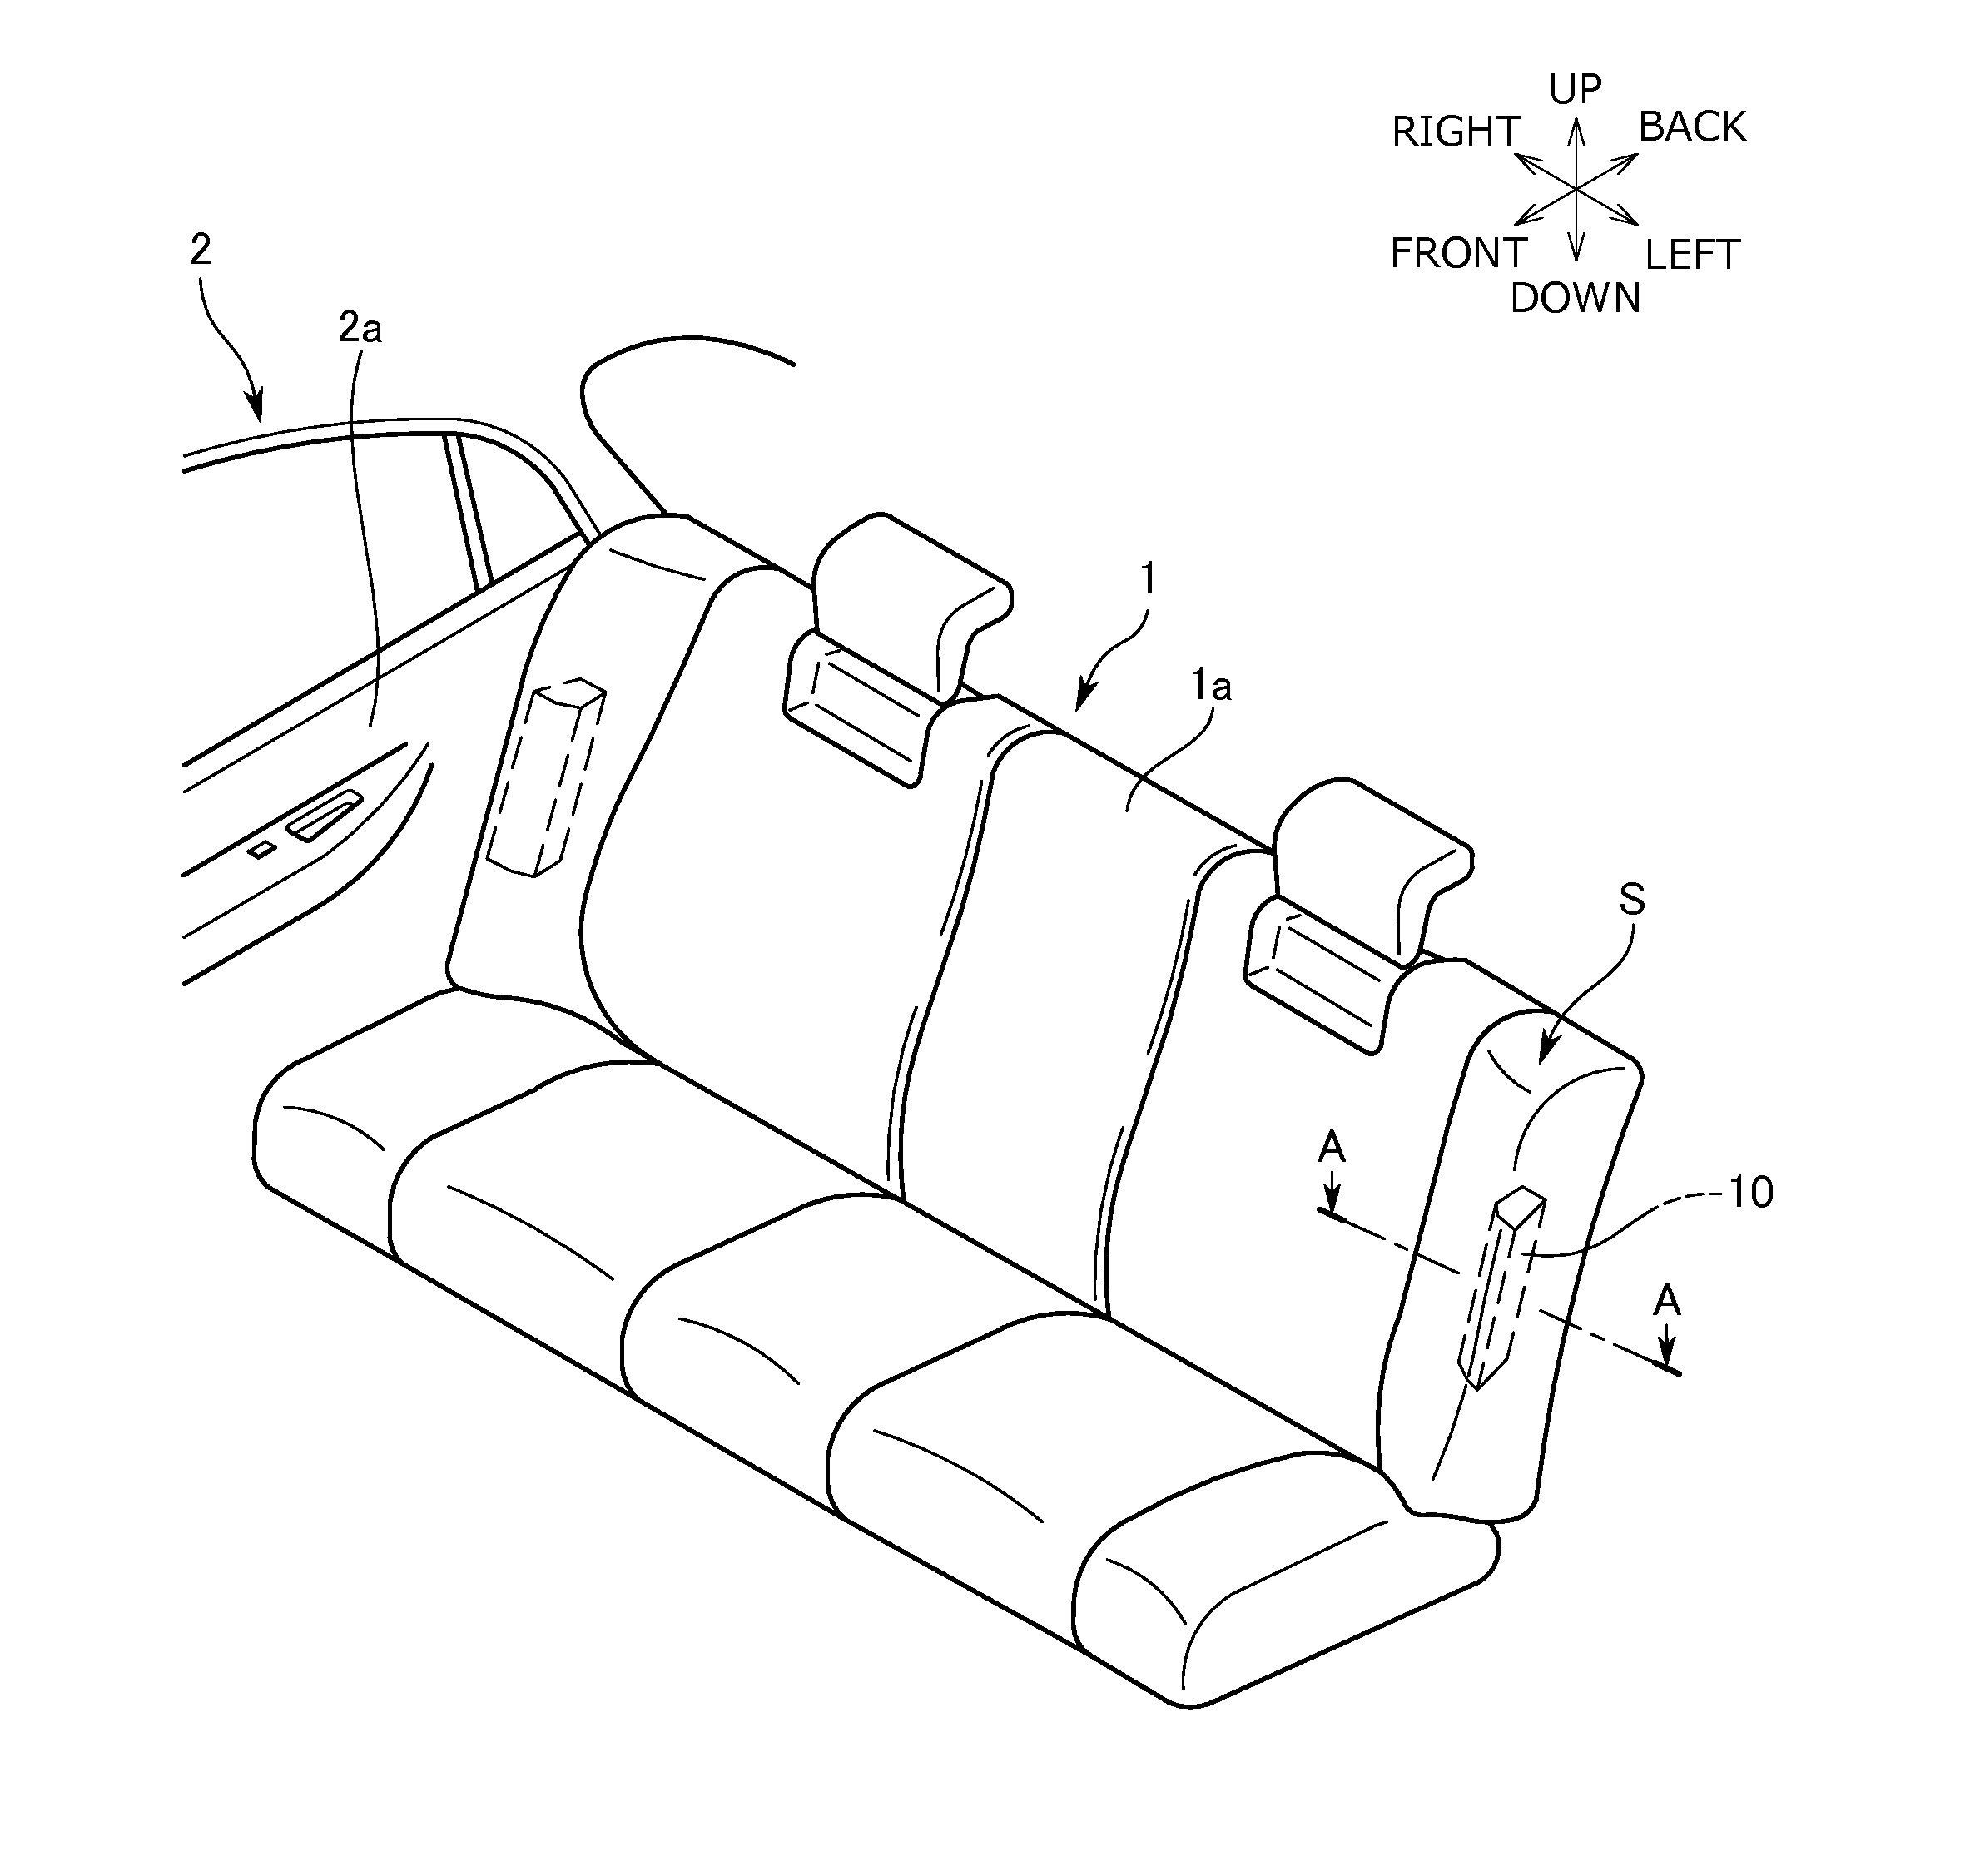 Side airbag apparatus